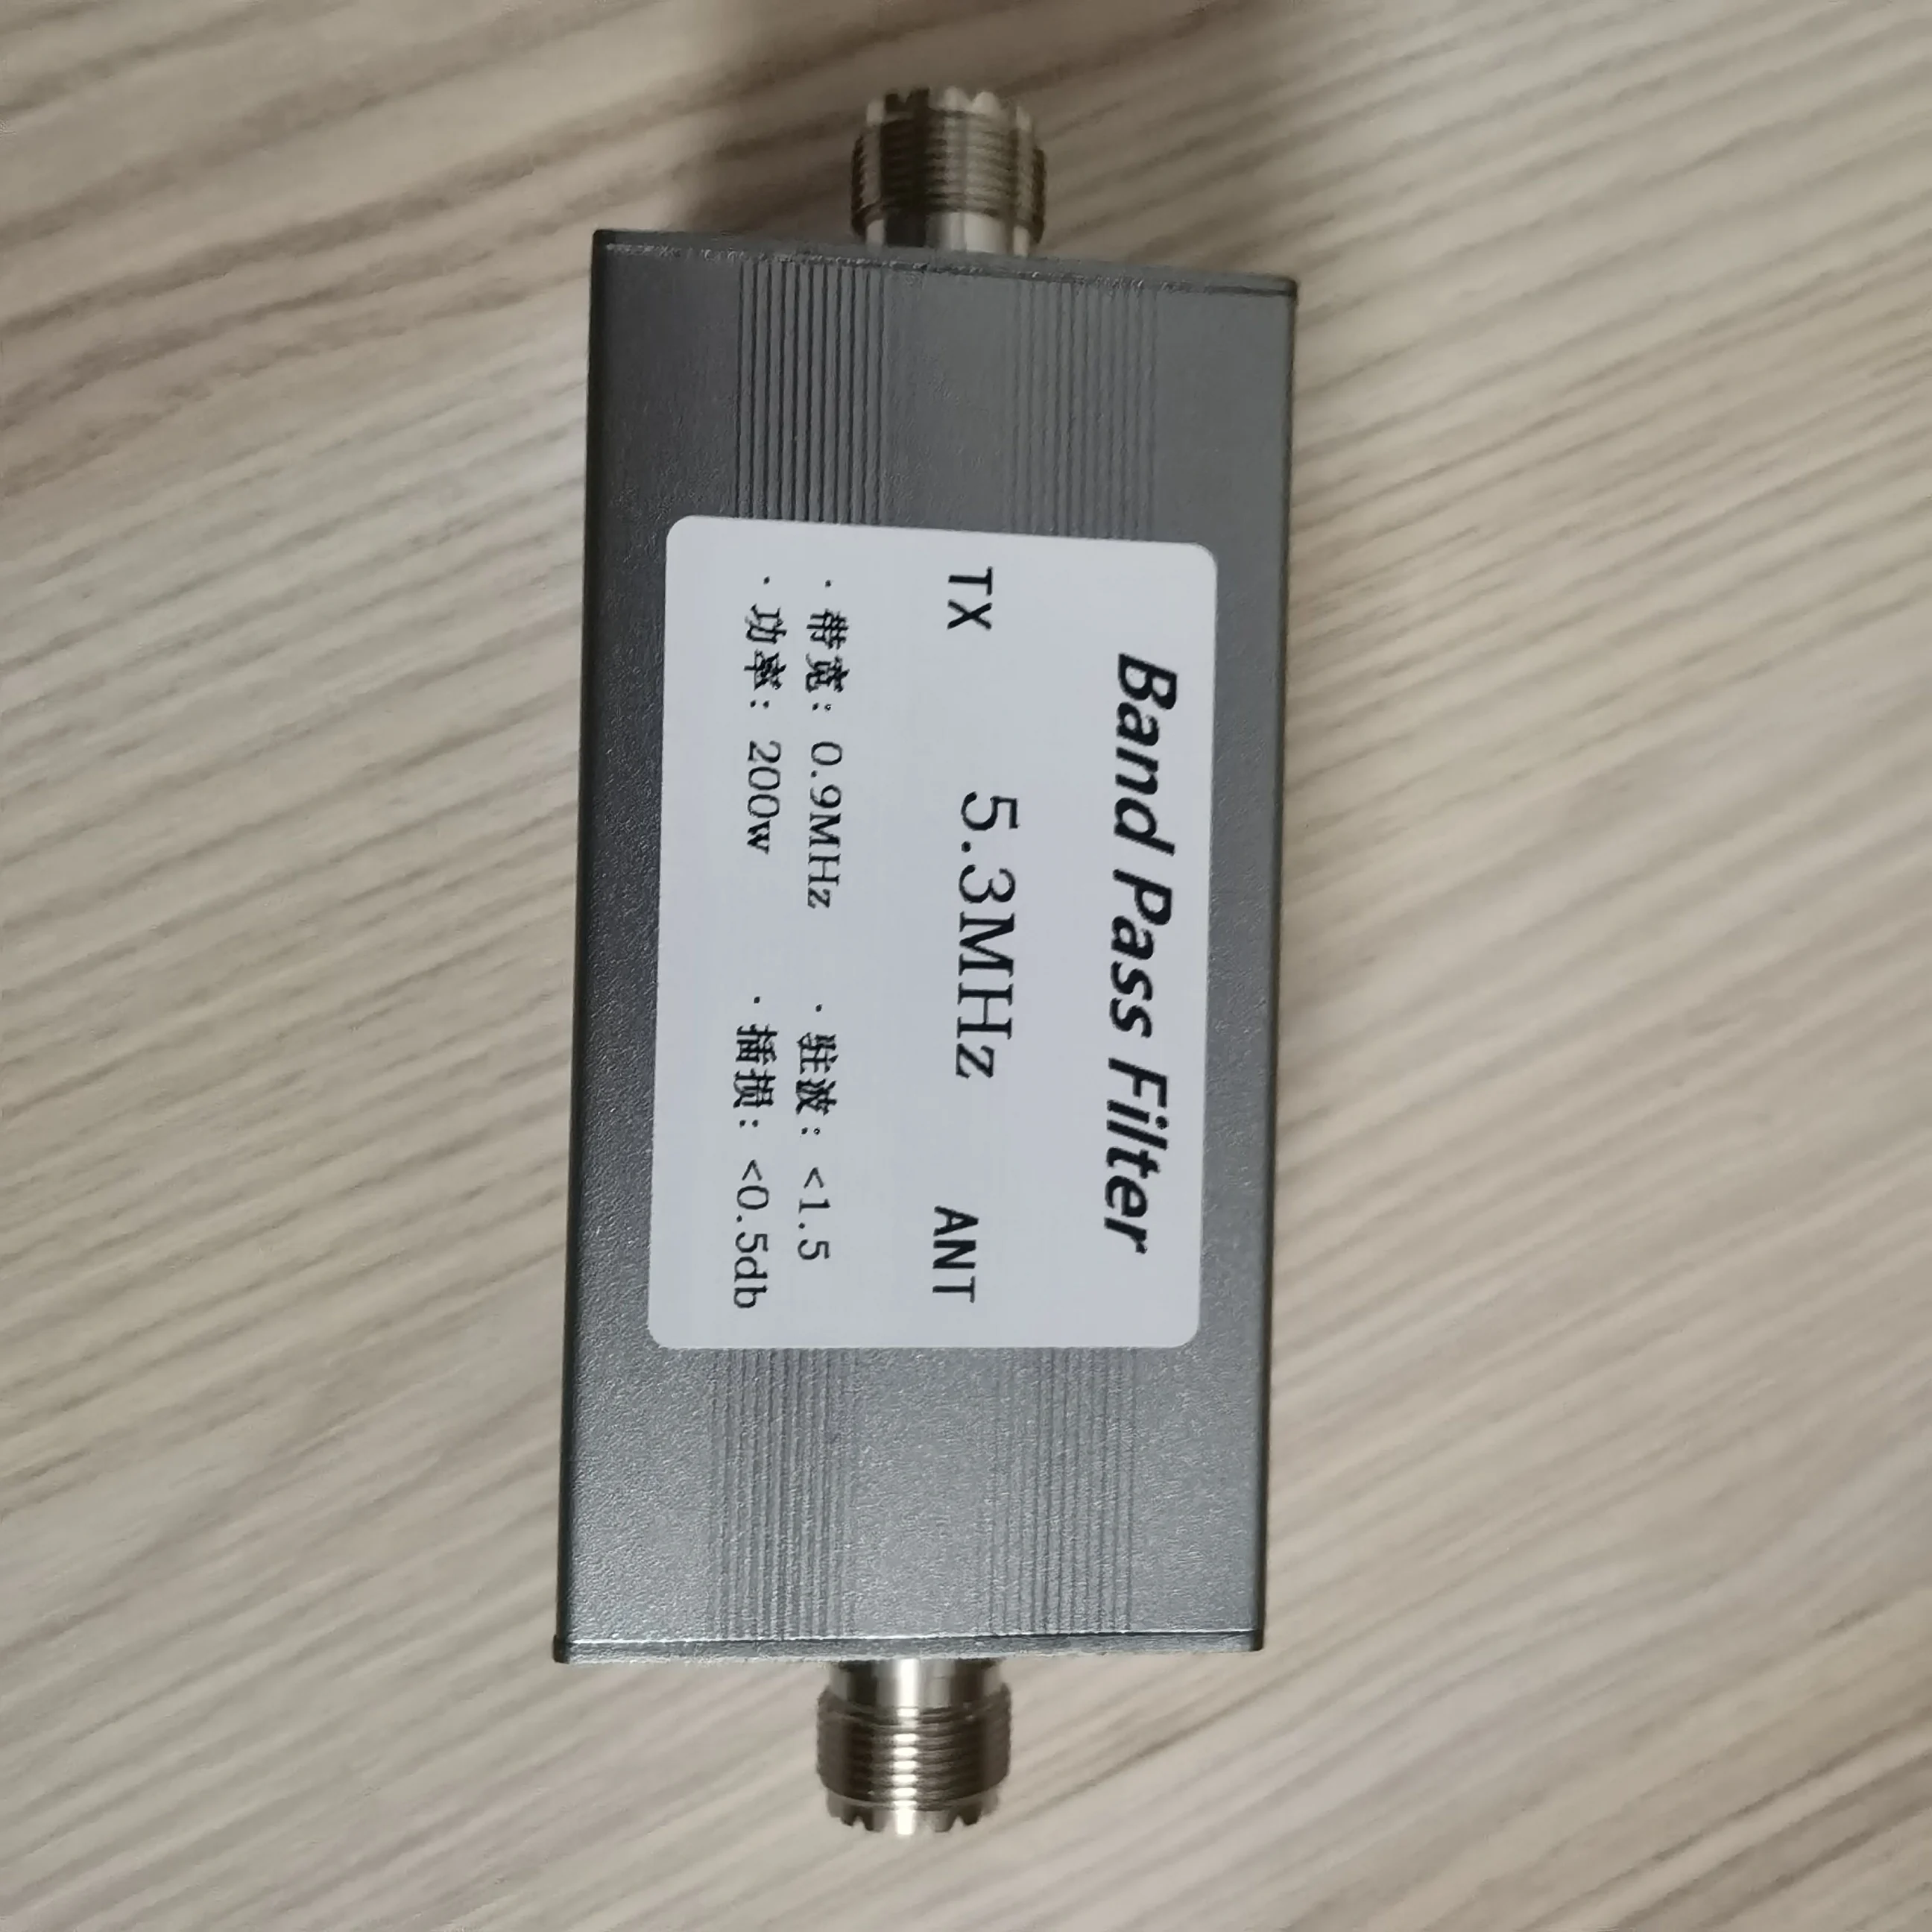 BPF-5.3 5.3MHz Band Pass Filter BPF Transceiver Anti-jamming Improve Selectivity Short Wave 60m Band